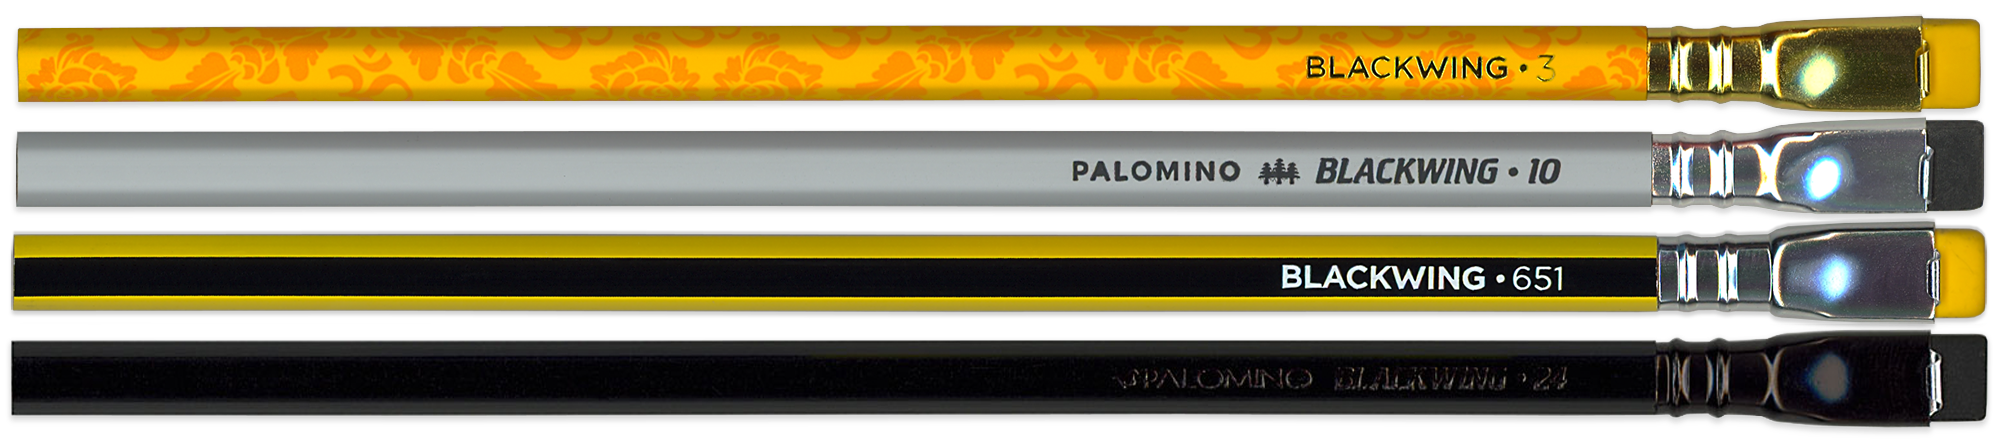 Blackwing Pencils Set of 4 